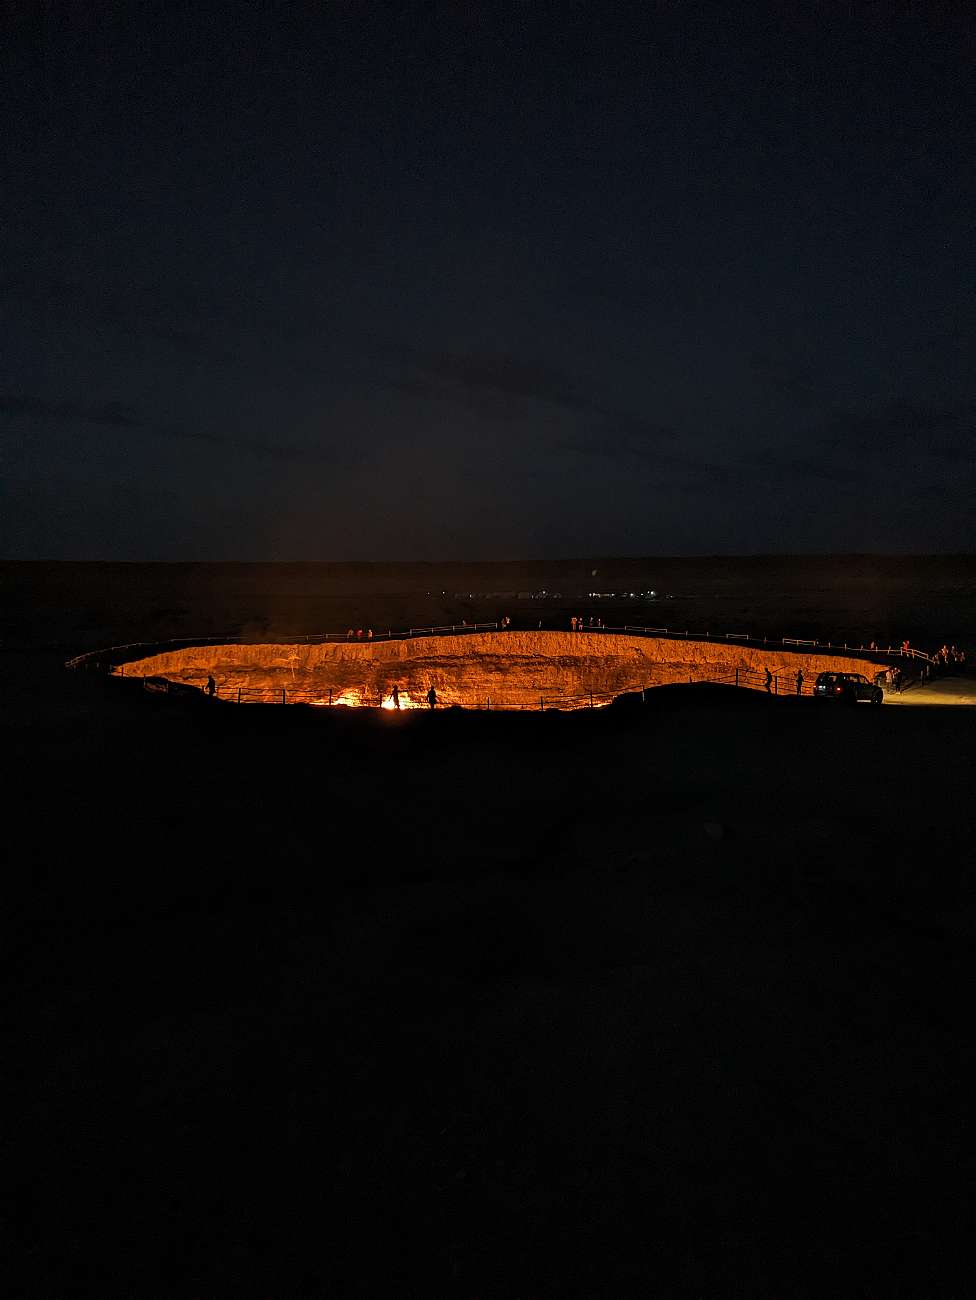 The Gates of Hell (Darwaza, Turkmenistan) - at night